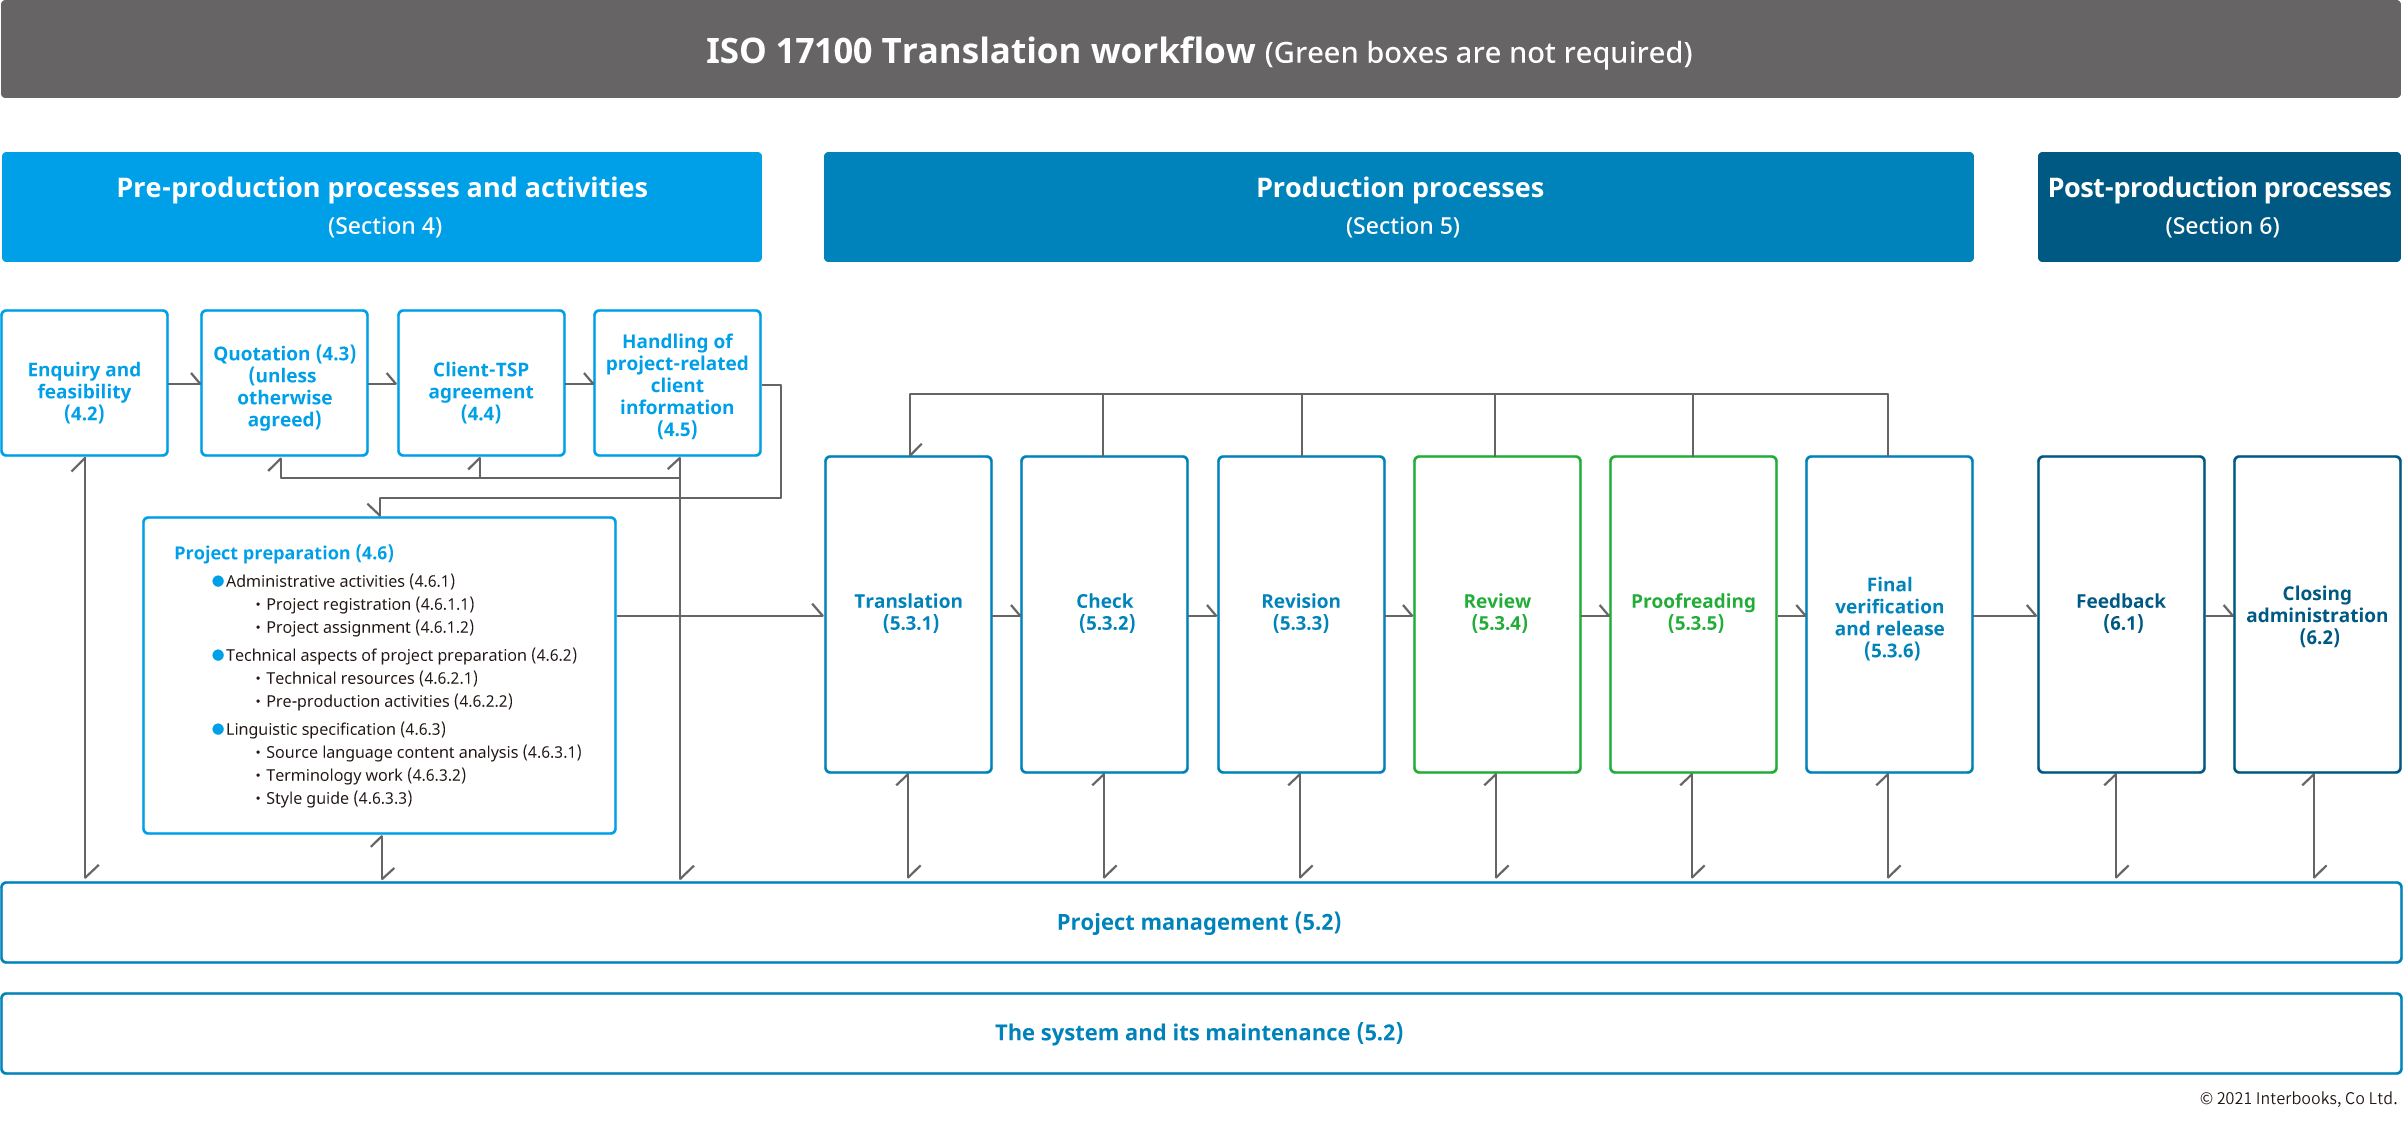 ISO 17100-Compliant Translation Workflow